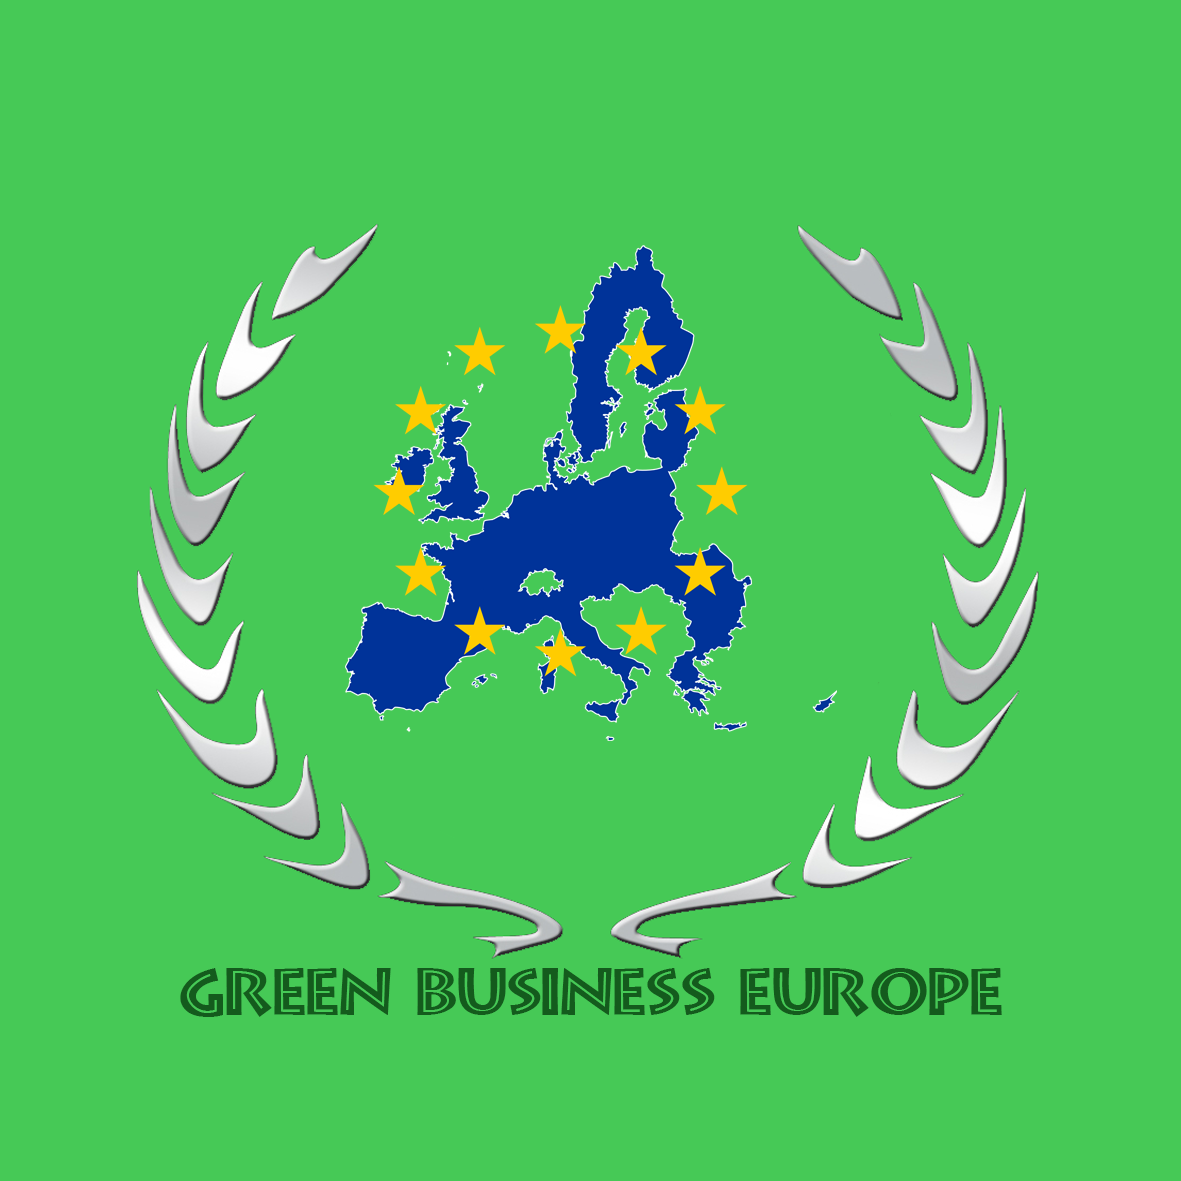 (c) Green-business-europe.de